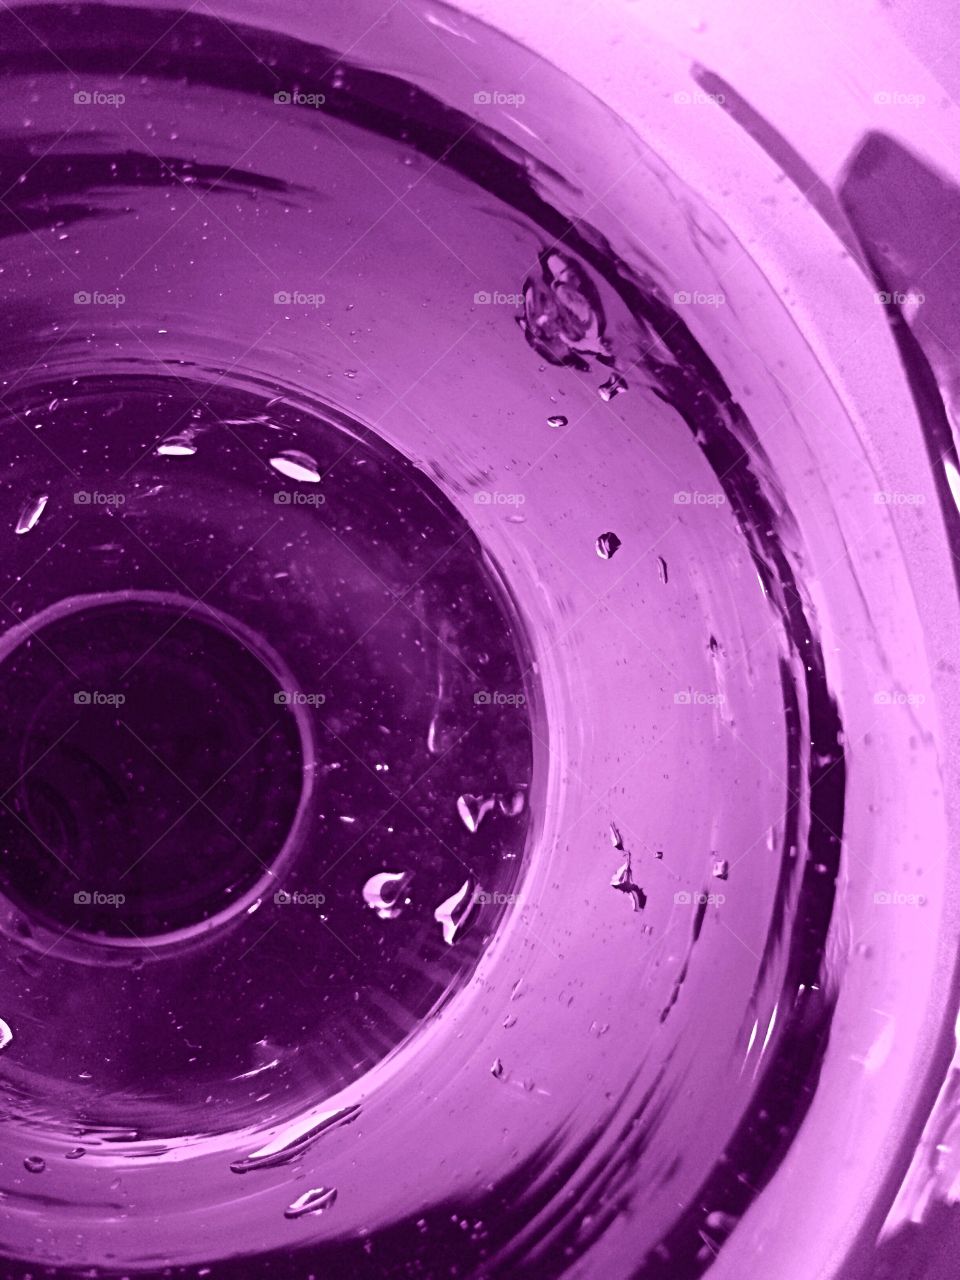 Macro close-up of purple washing machine